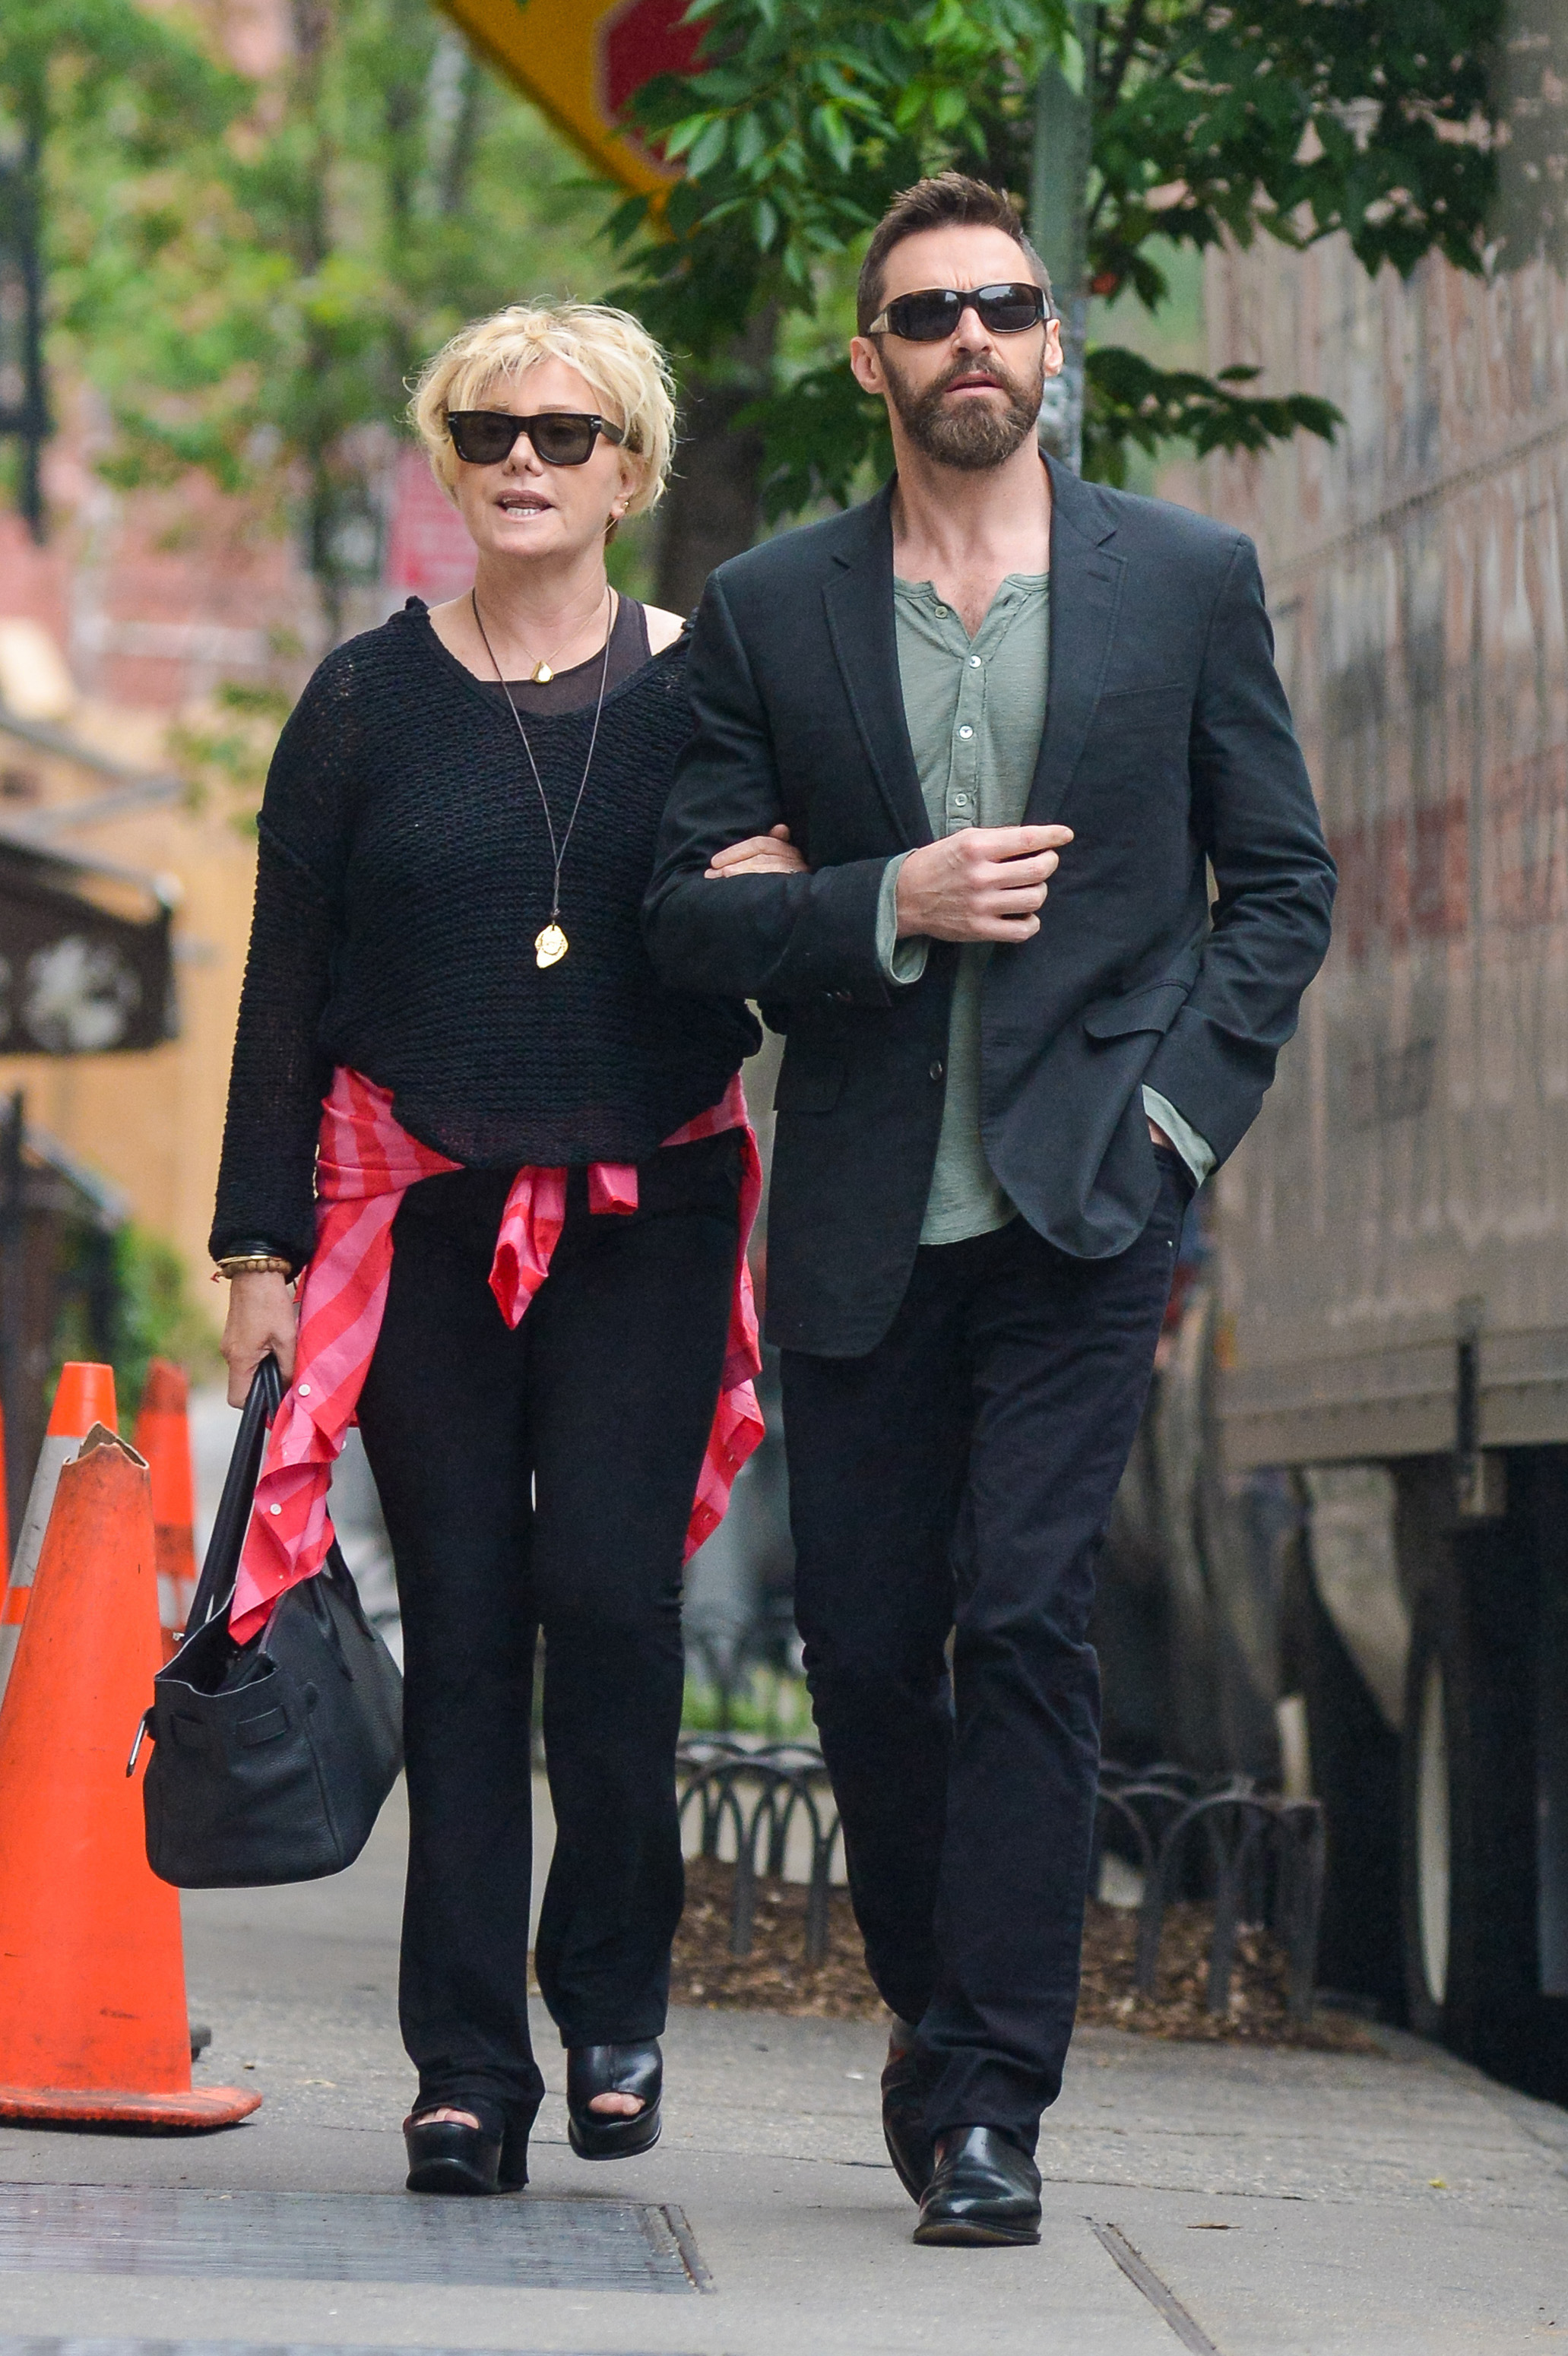 Hugh Jackman and Deborra-Lee Furness in New York City in 2014 | Source: Getty Images